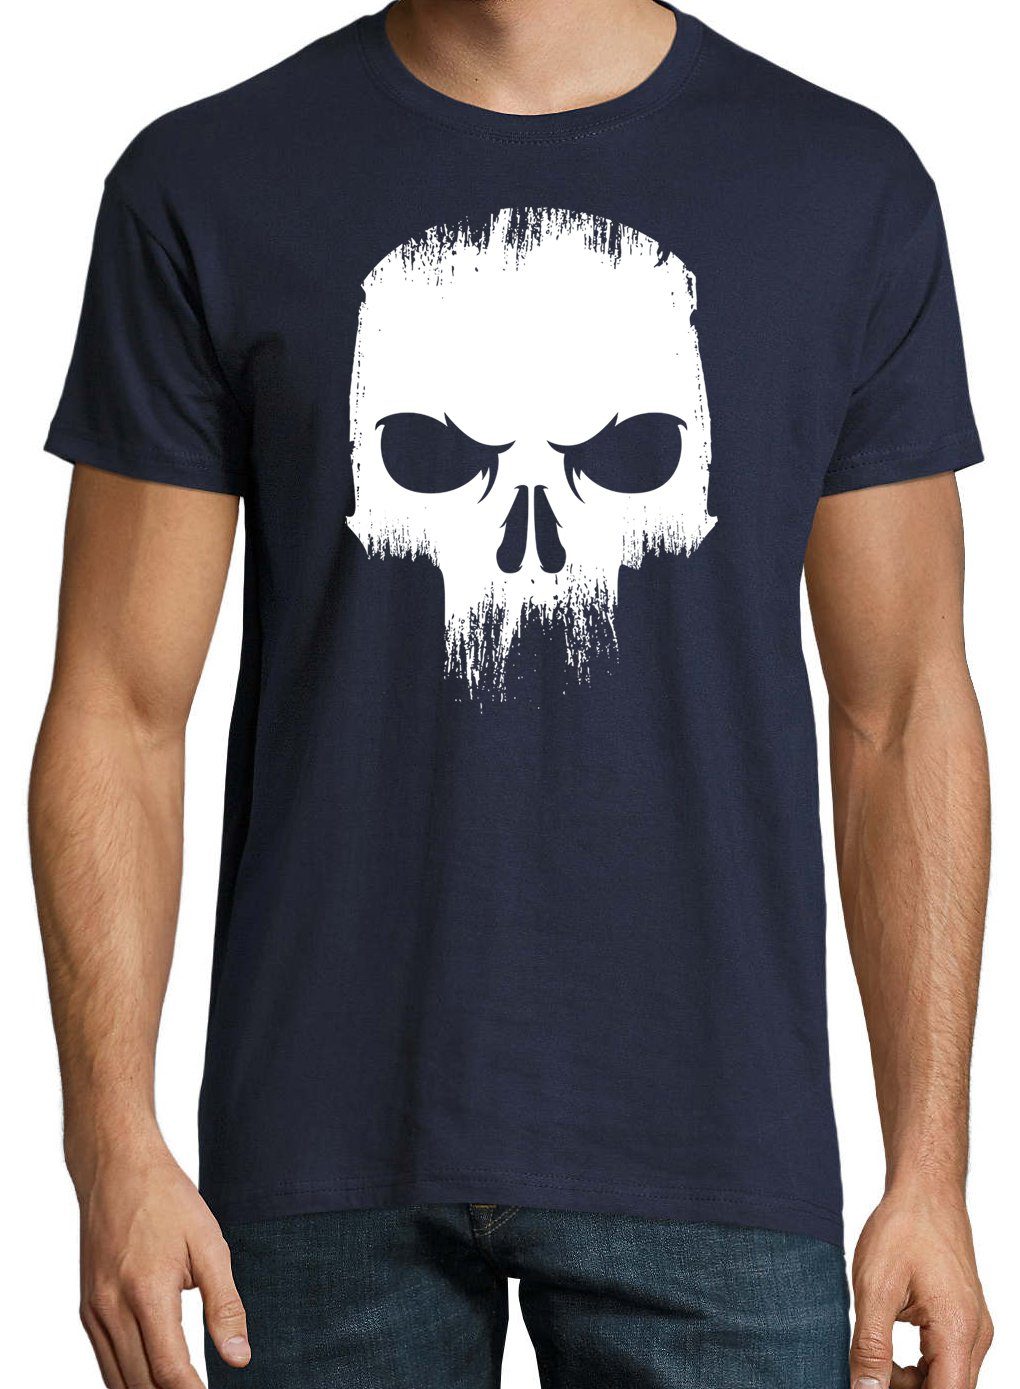 T-Shirt trendigem Frontprint Shirt Herren Angry Youth mit Designz Skull Totenkopf Navyblau